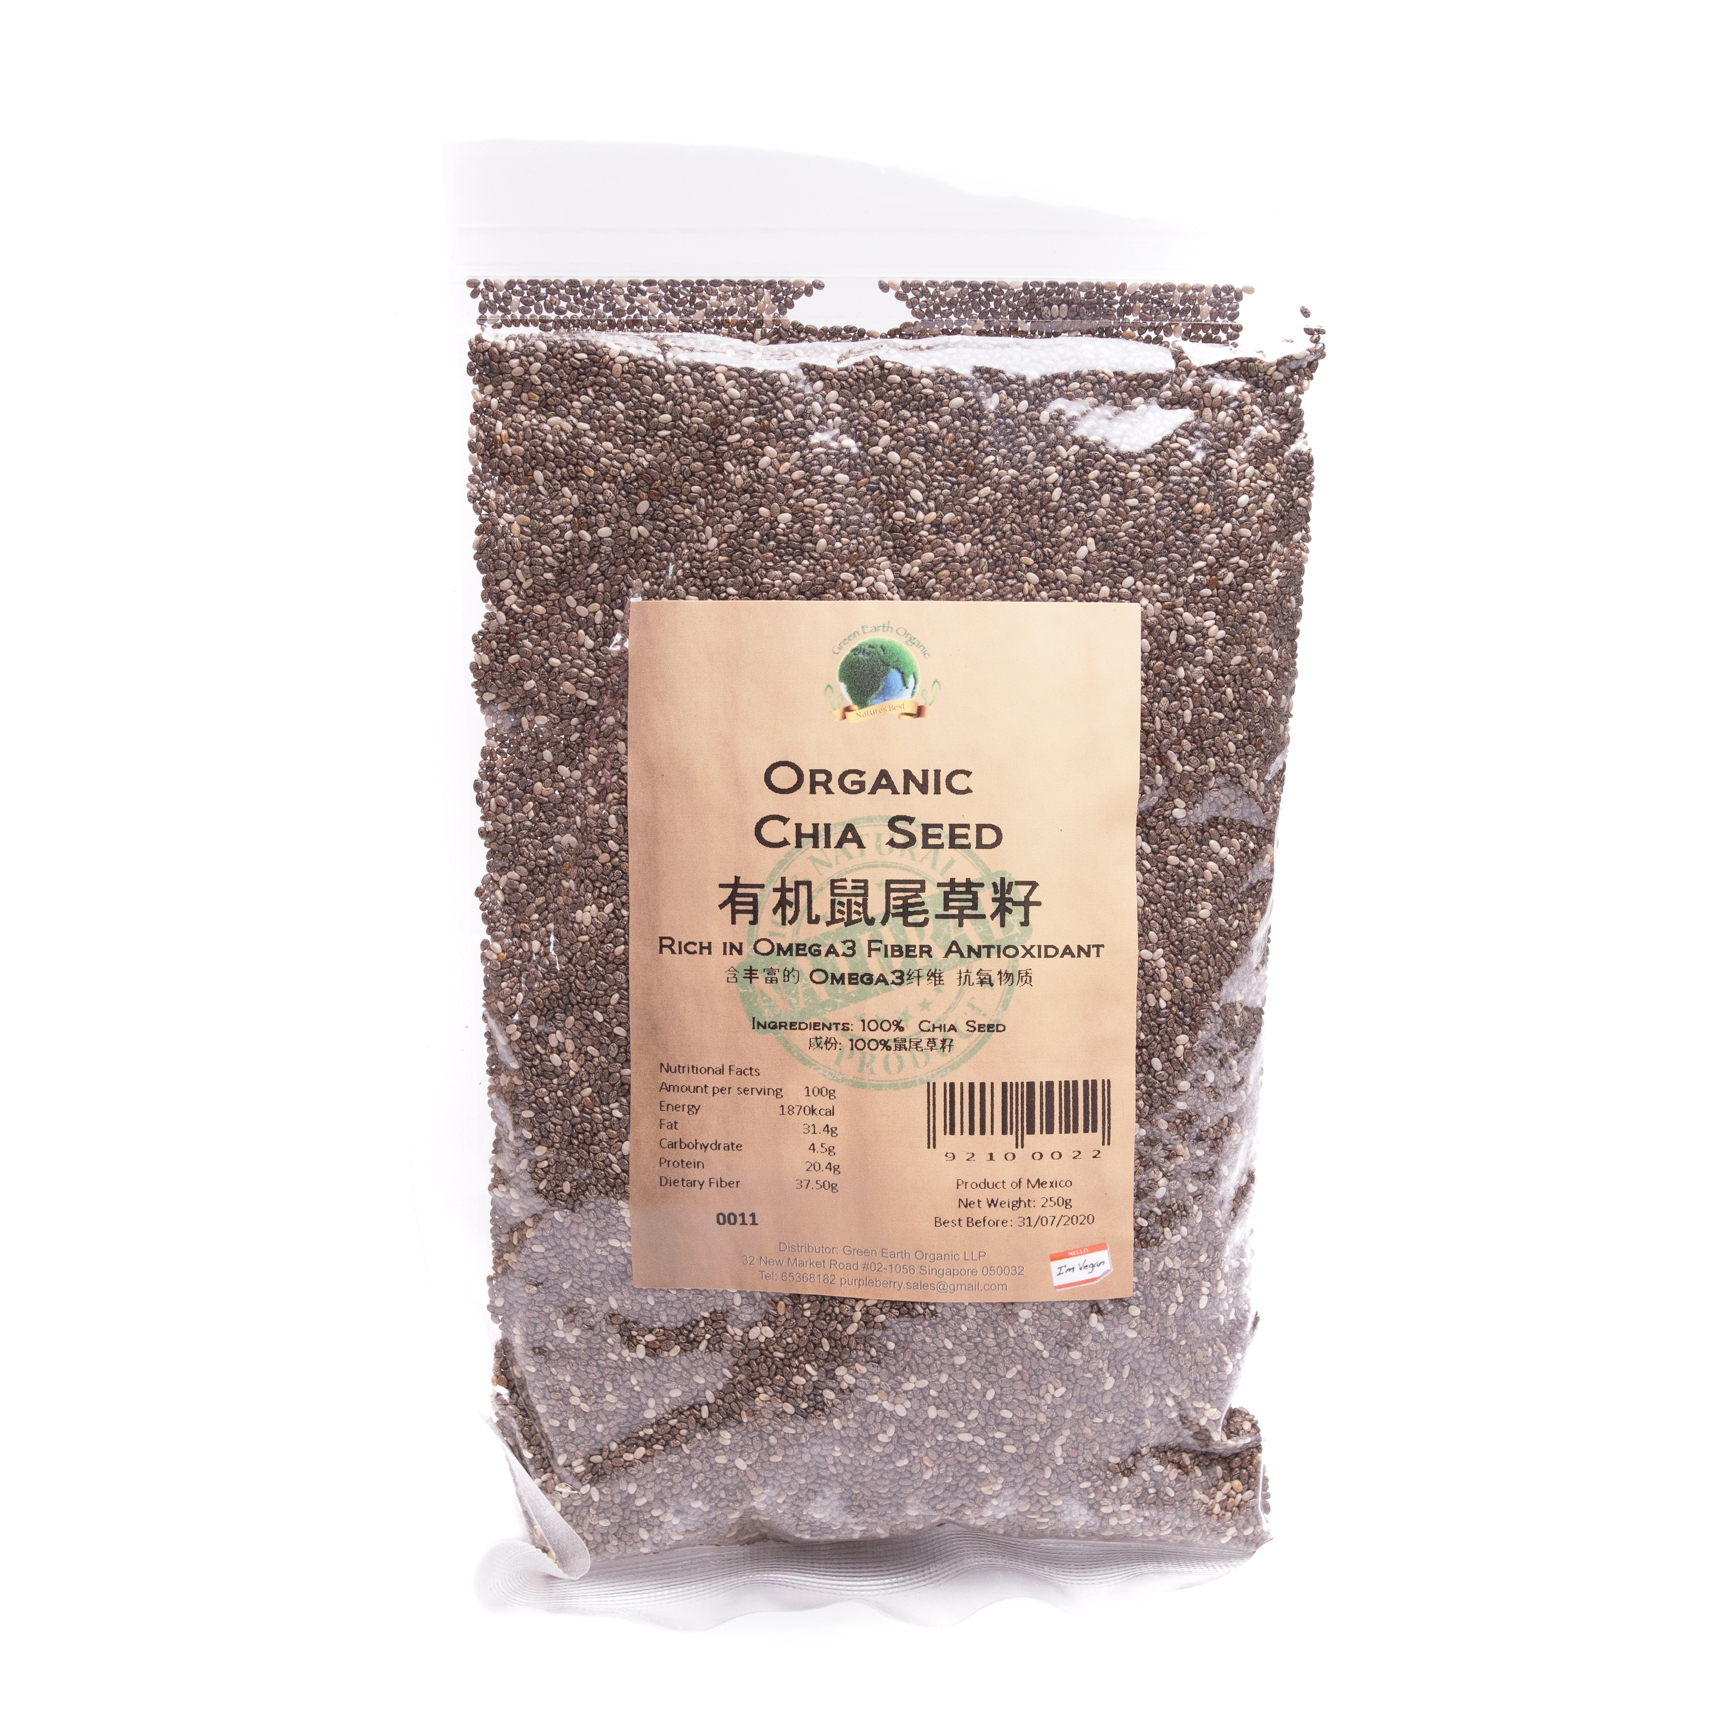 Organic Black Chia Seed